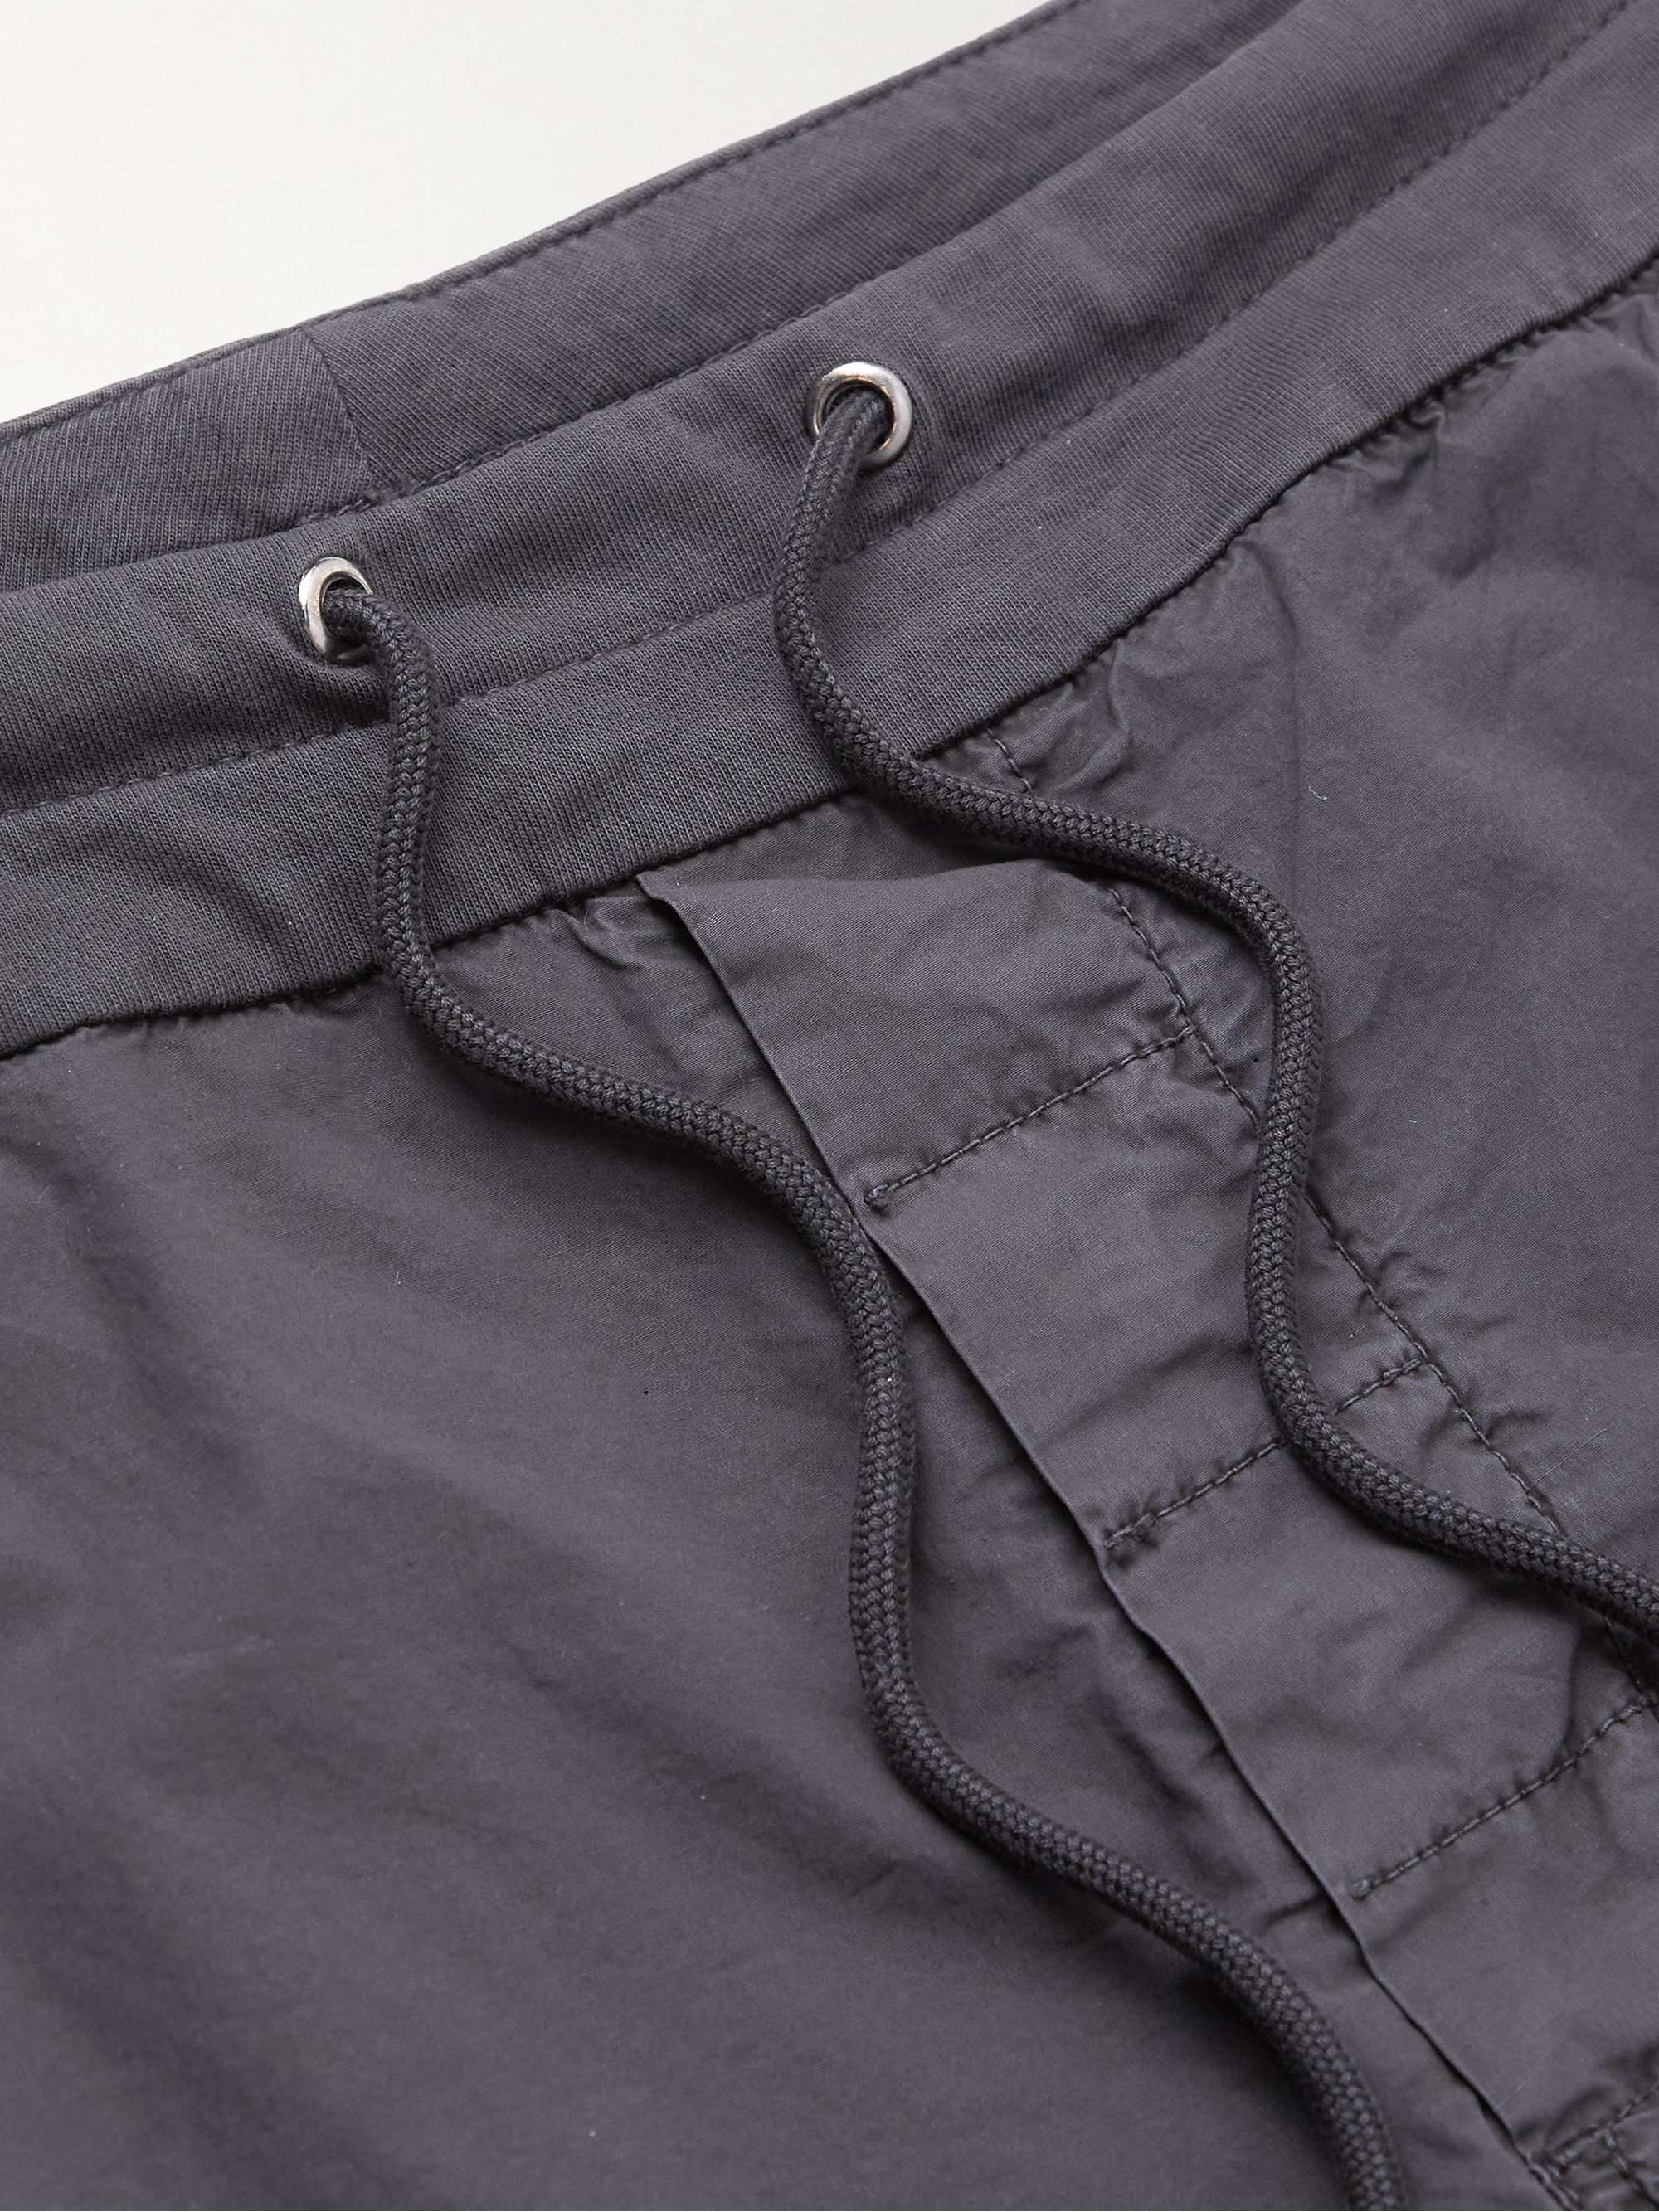 JAMES PERSE Garment-Dyed Cotton-Blend Poplin Cargo Shorts